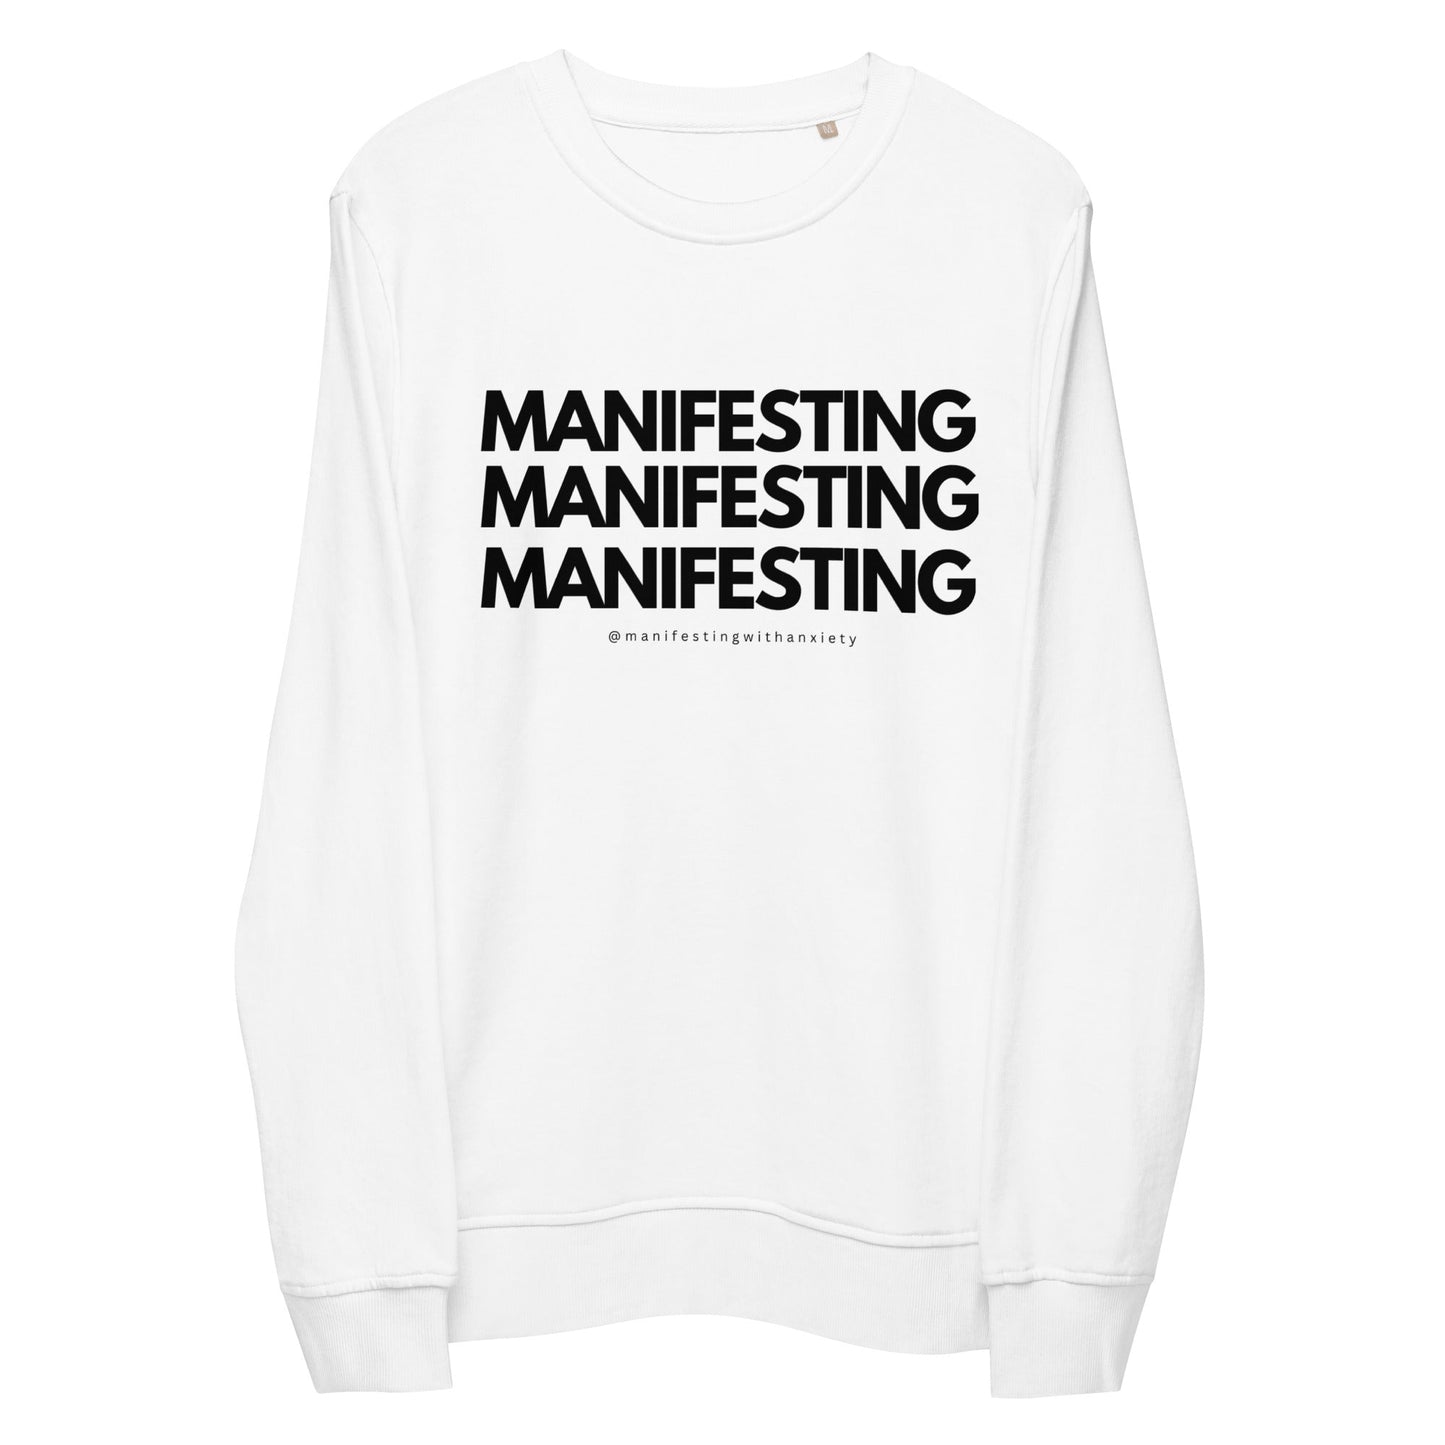 Merch Unisex Organic MANIFESTING sweatshirt Build Self Confidence Self Love Eco Friendly - manifesting with anxiety